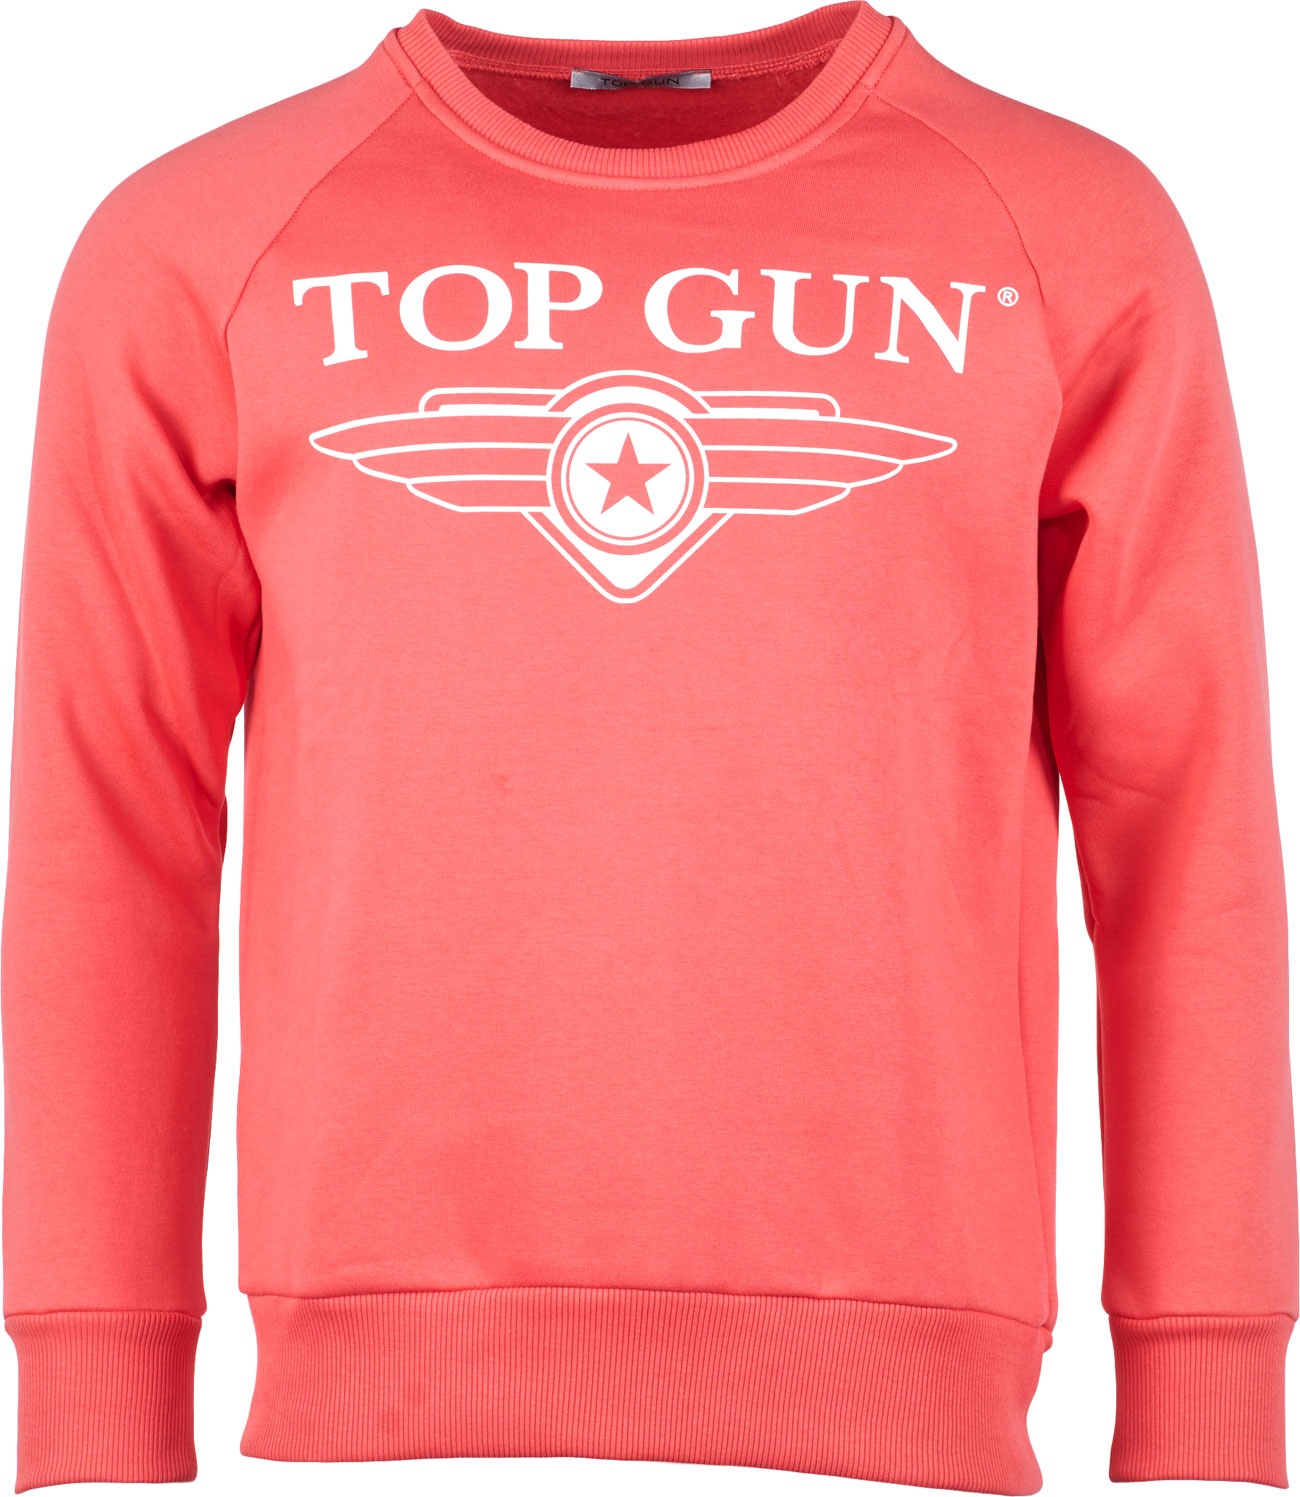 Top Gun Soft, Sweatshirt - Rouge - M